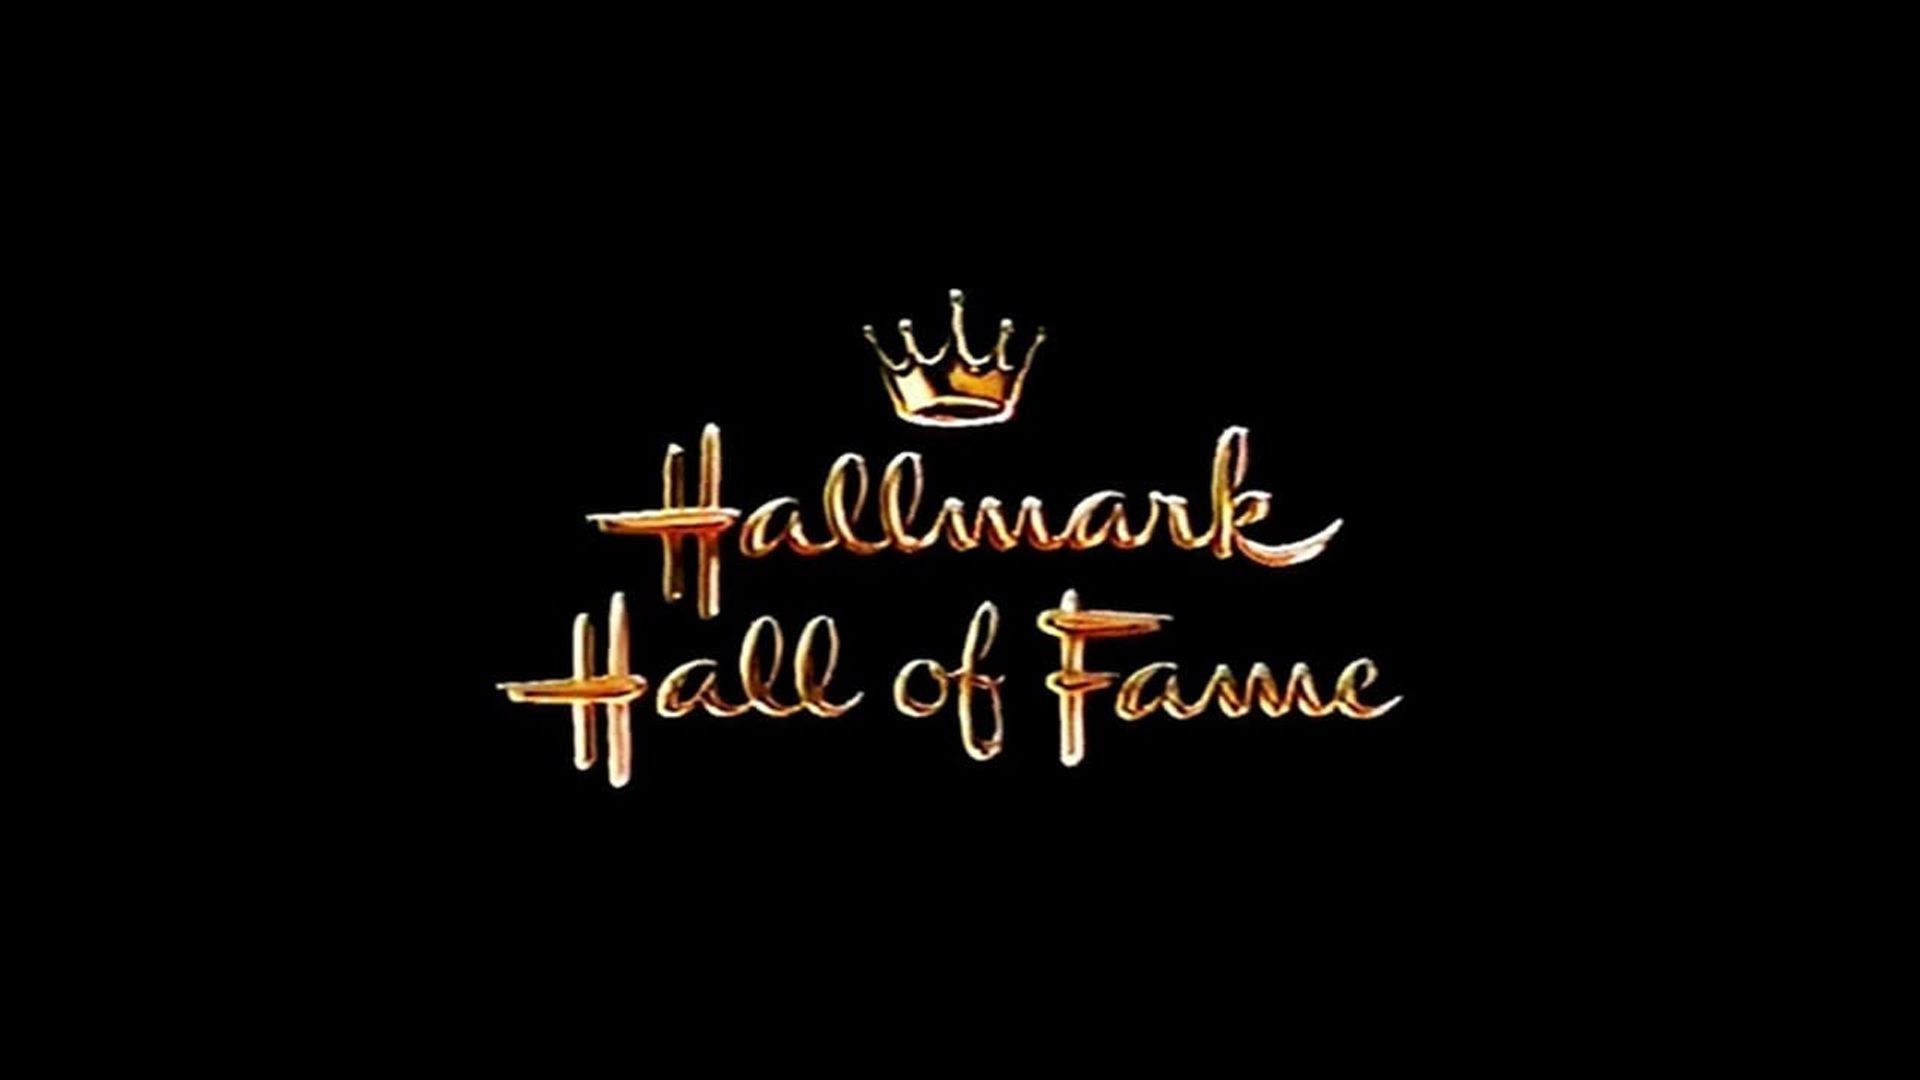 Hallmark Hall of Fame background